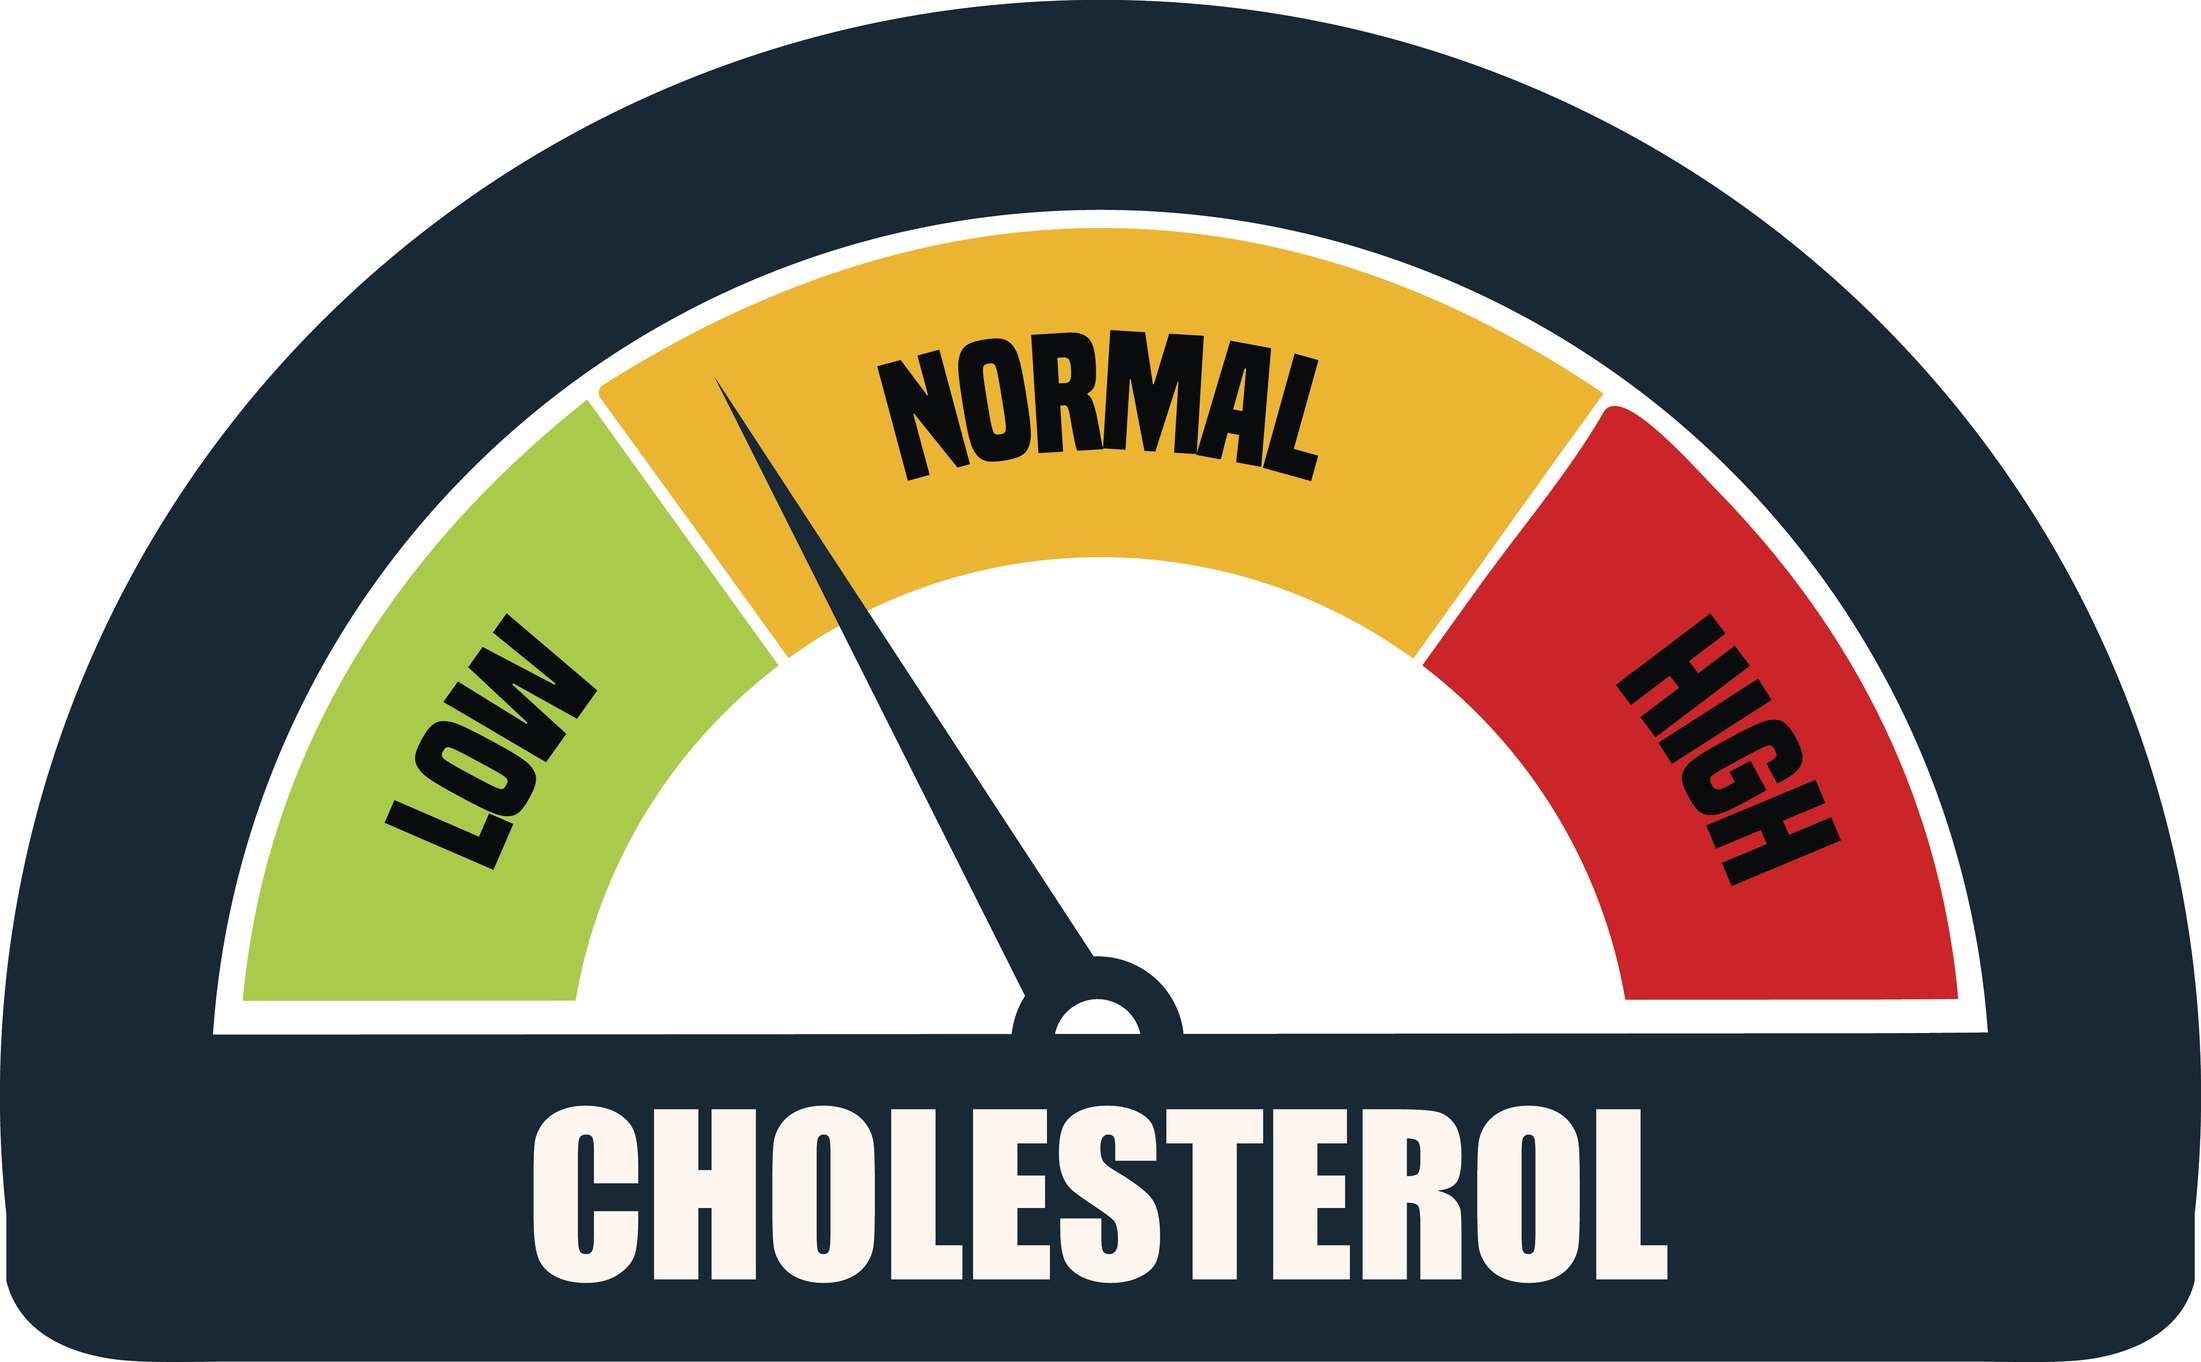 Female Cholesterol Chart